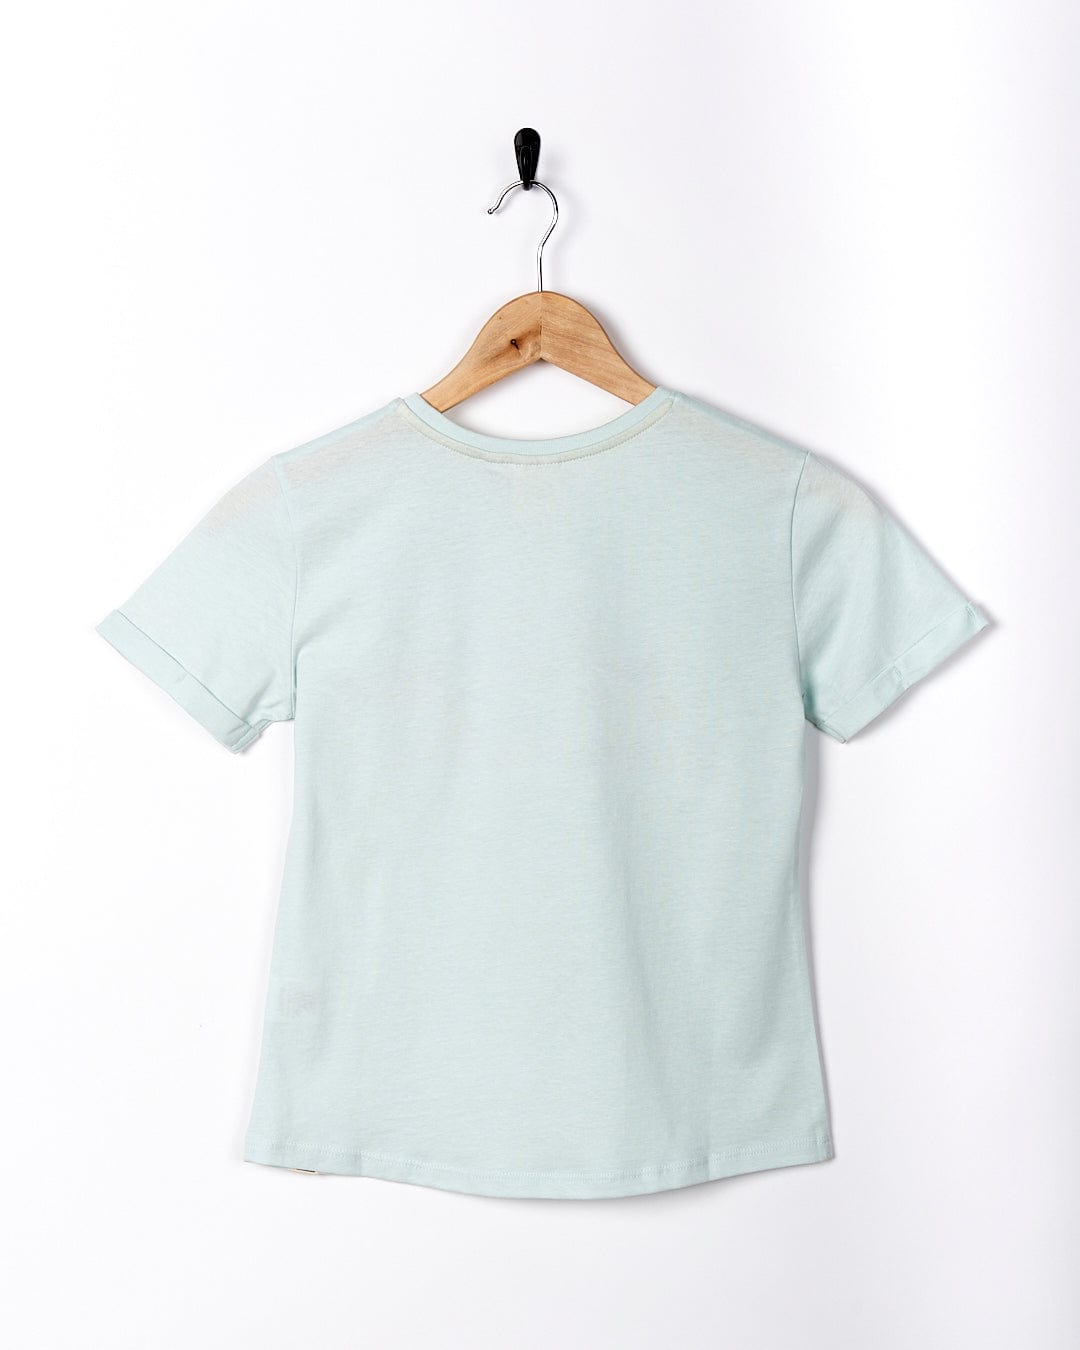 A Seabed - Kids Short Sleeve T-Shirt - Light Blue hanging on a hanger. (Brand: Saltrock)